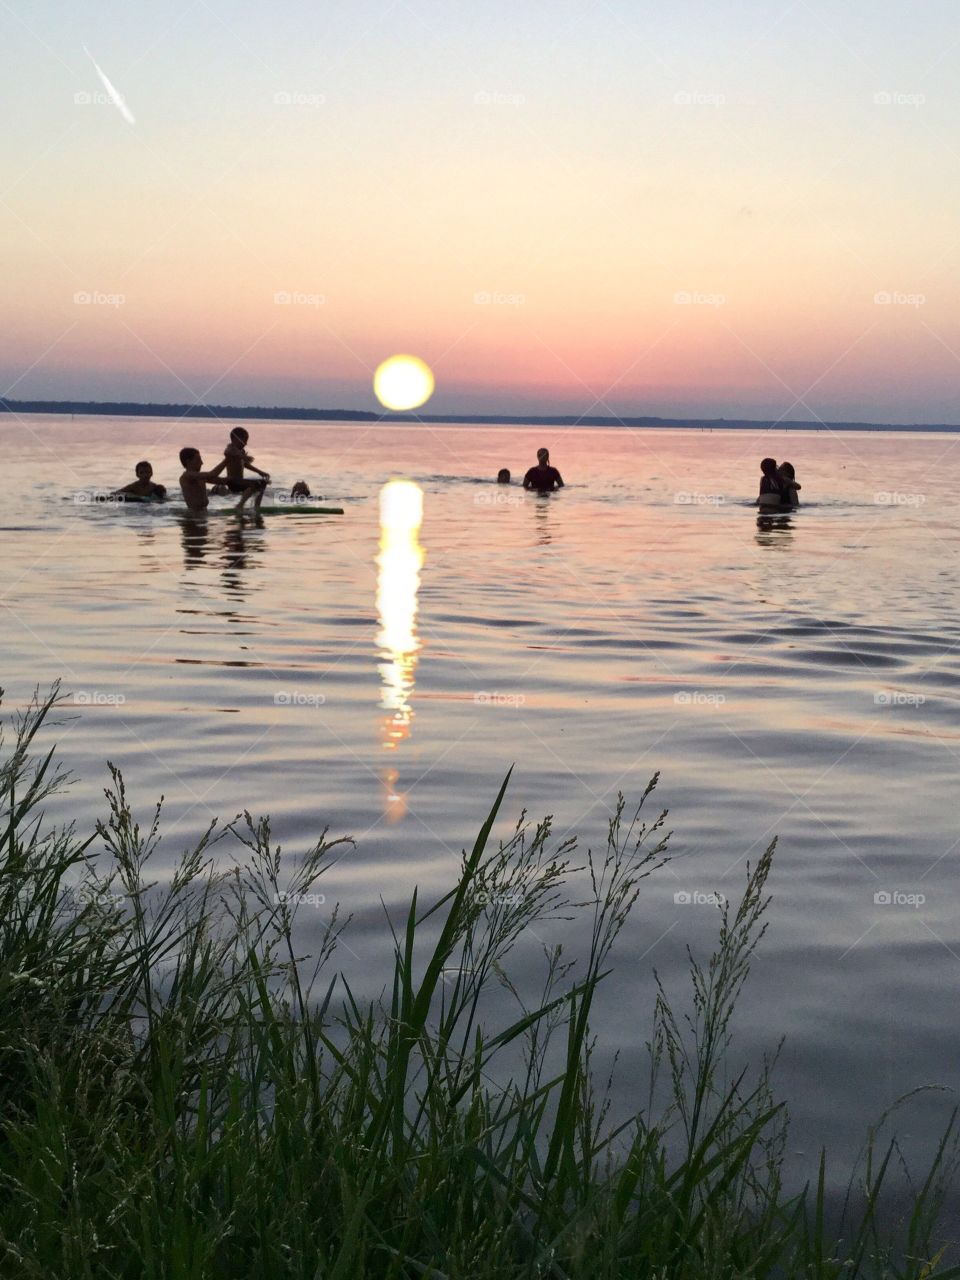 Local kids swimming after school.  Toledo  Bend Lake Converse, La.  August 2017 sunset